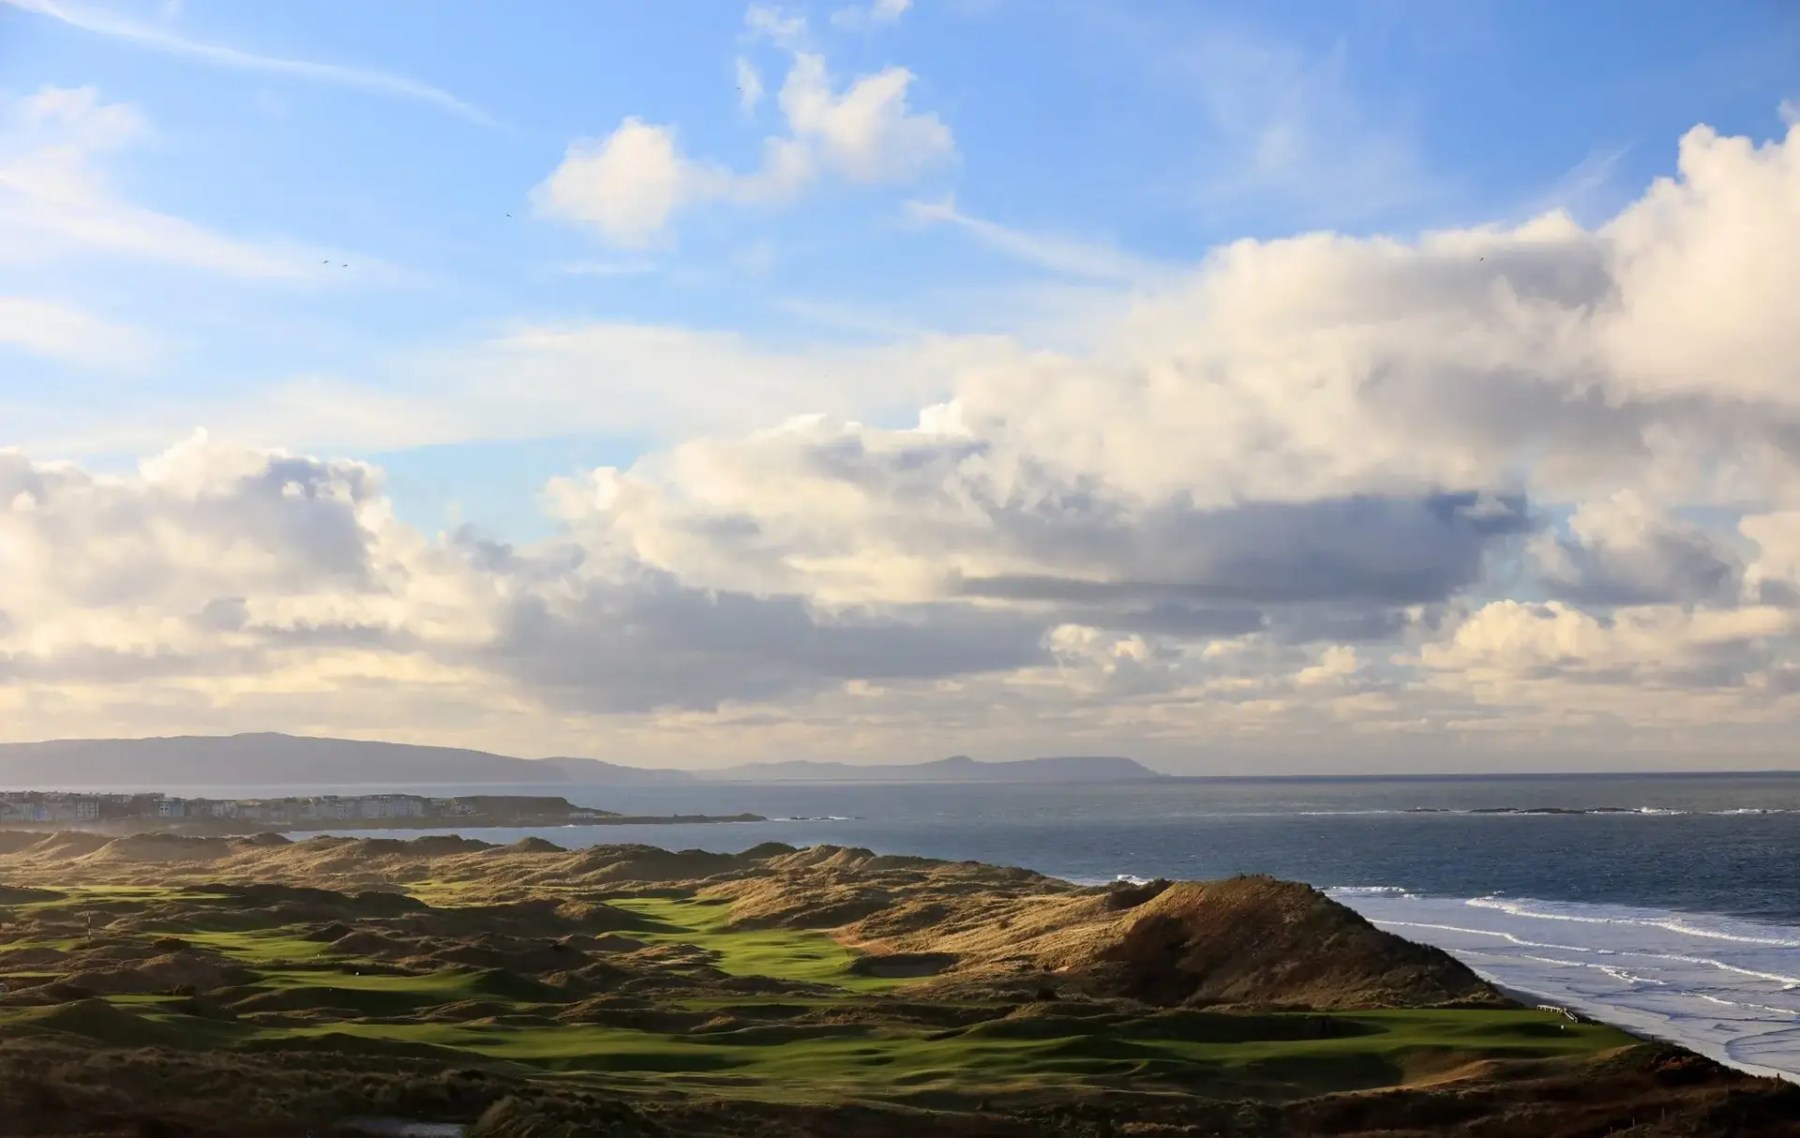 royal portrush golf club on a sunny day along the north coast